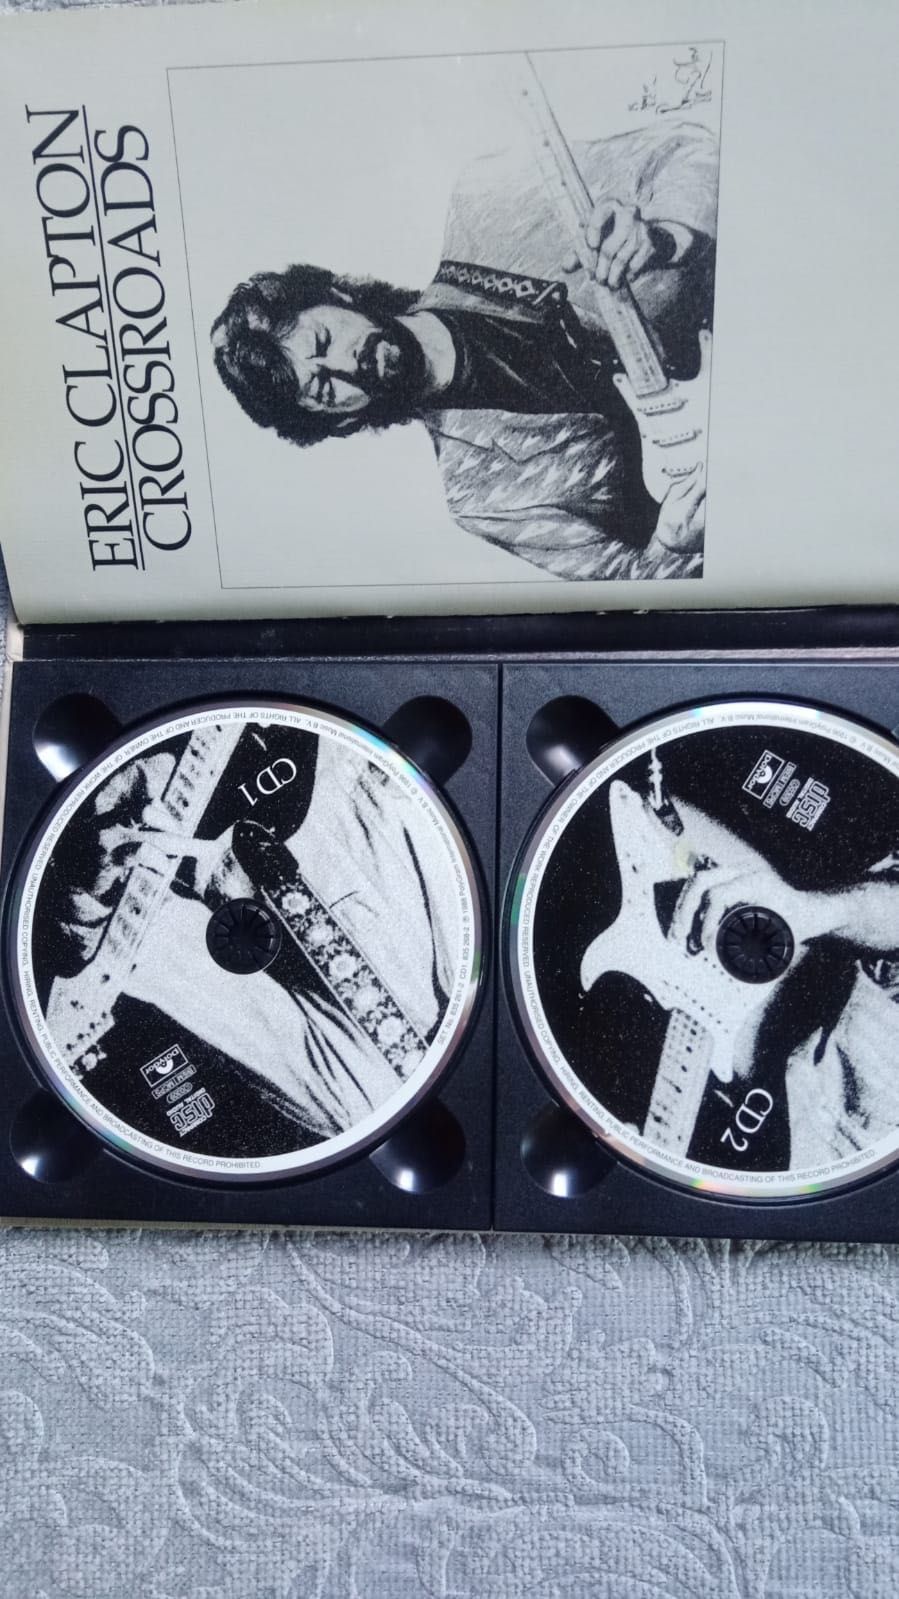 Eric Clapton Crossroads CD